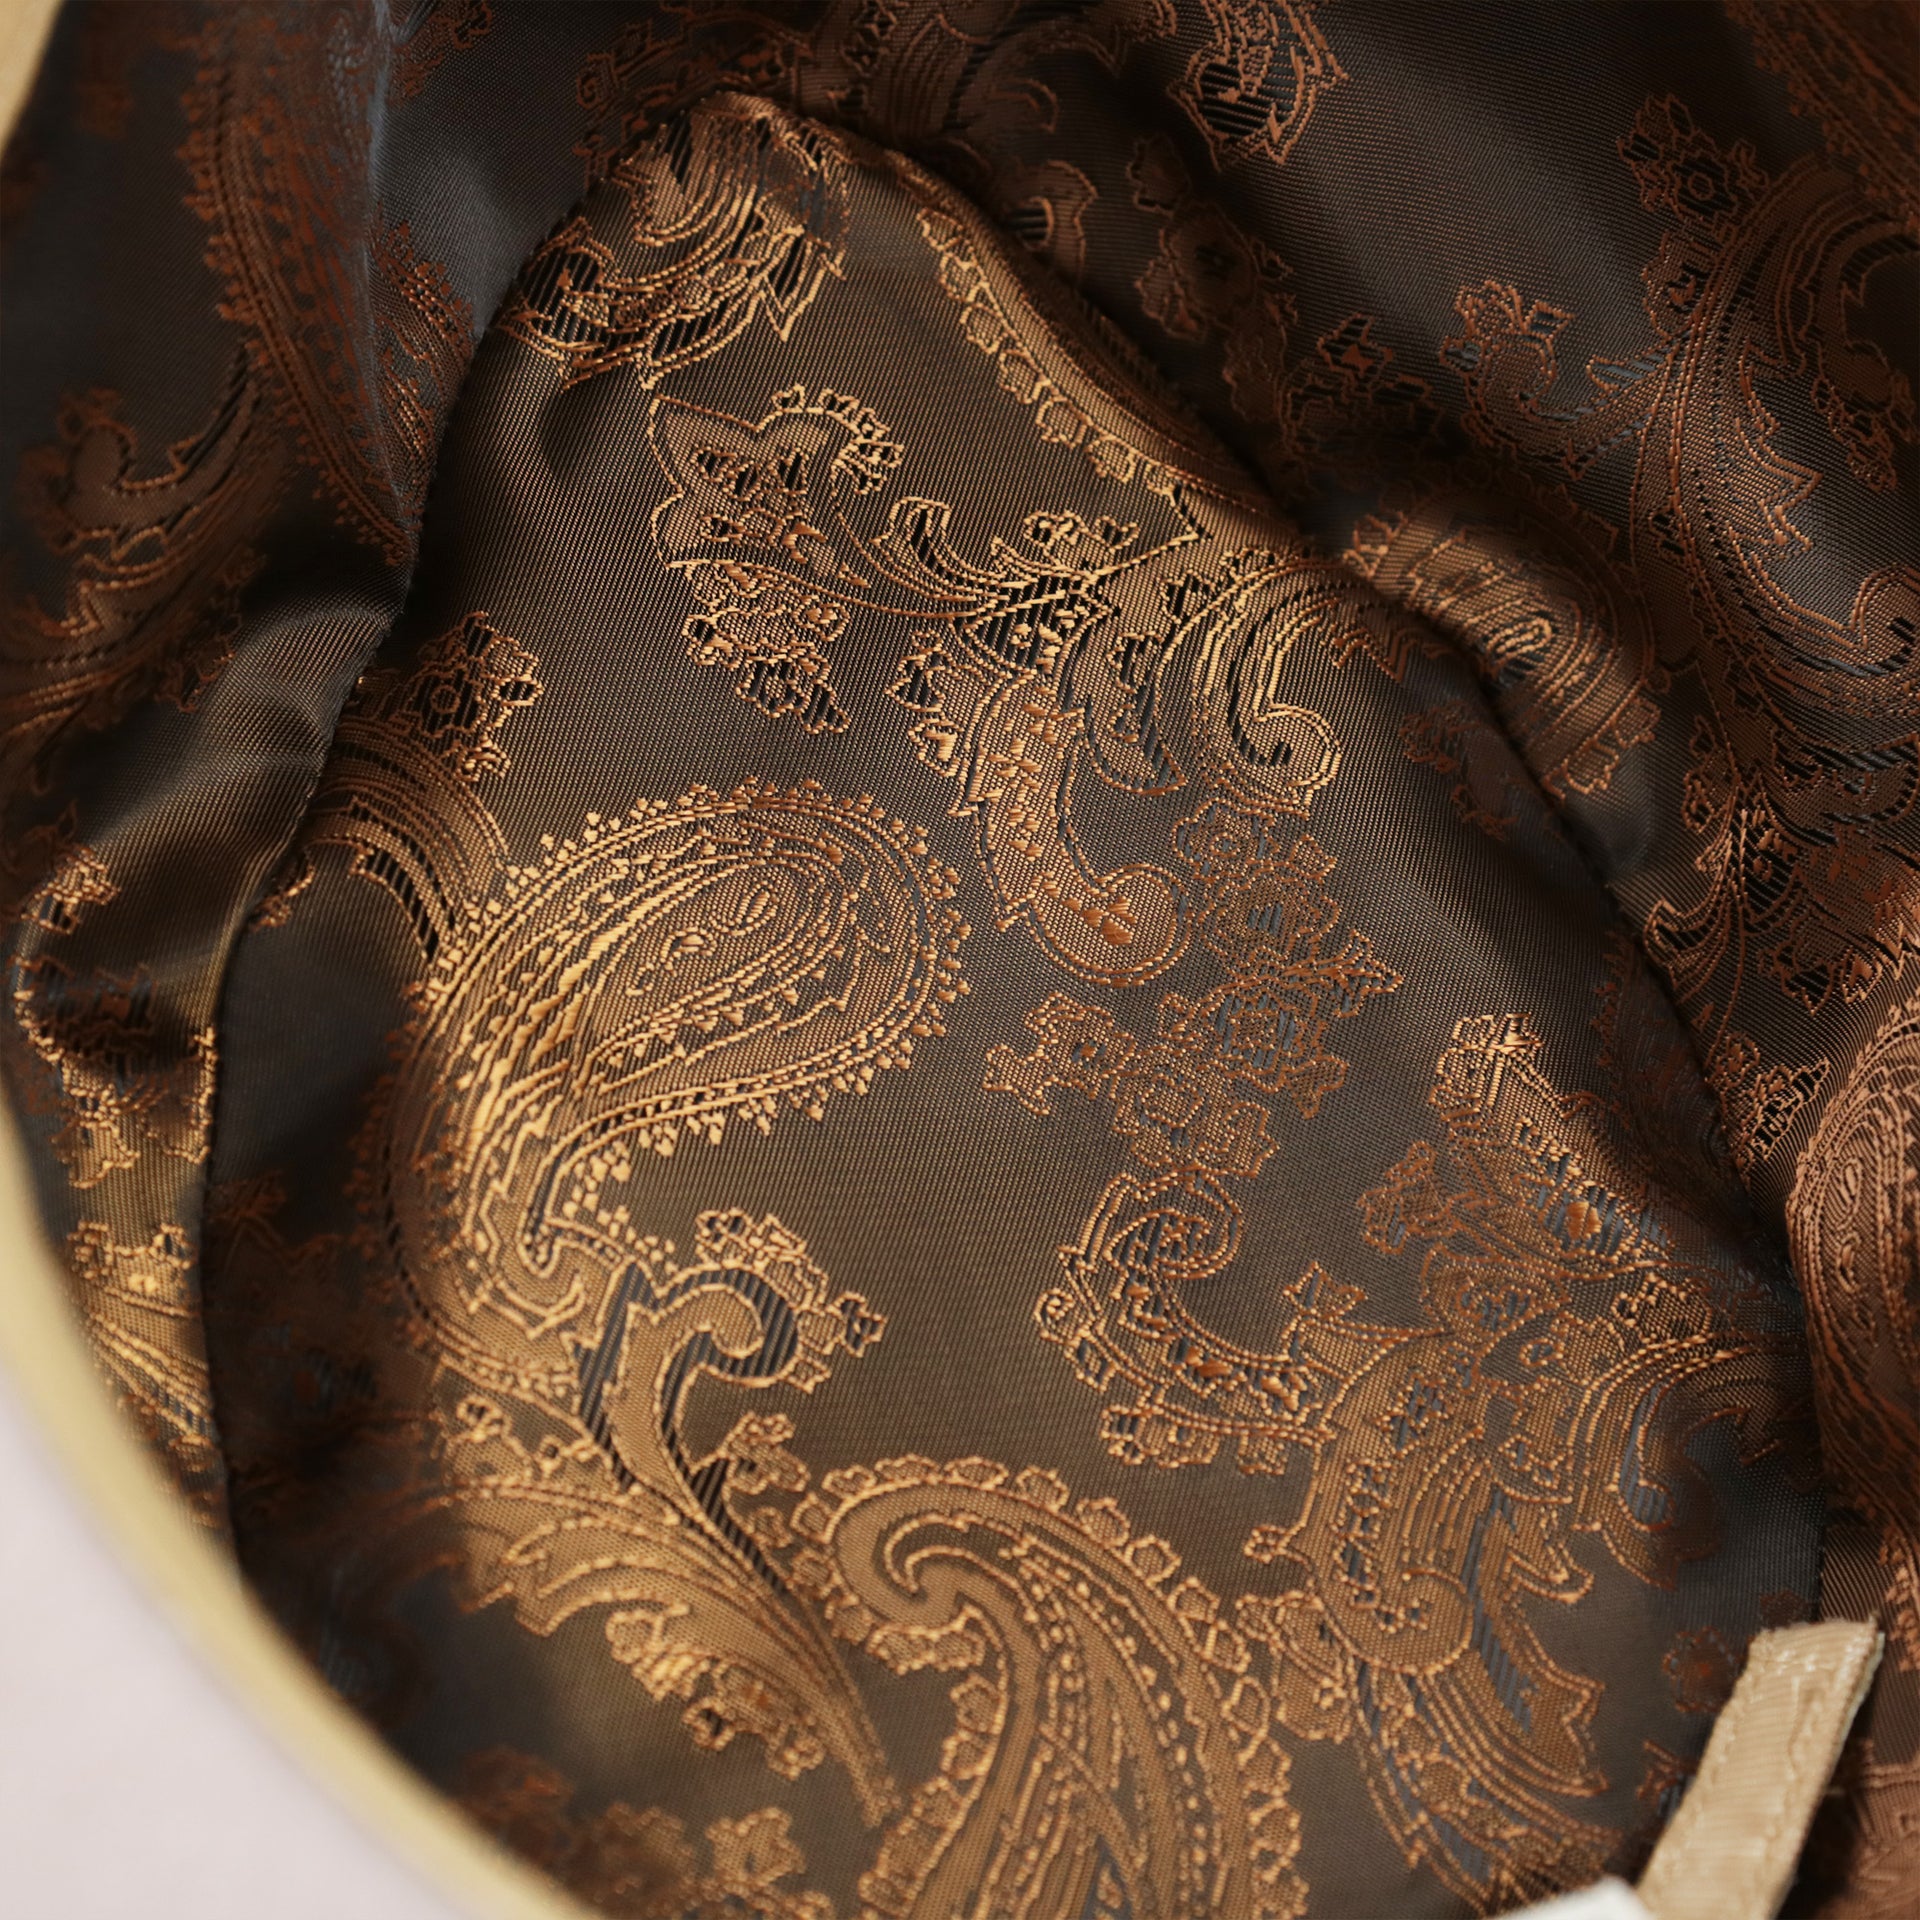 The interior of the Wide Brim Ribbon Trim Gray Fedora Hat with Brown Paisley Silk Interior | Zertrue 100% Australian Wool